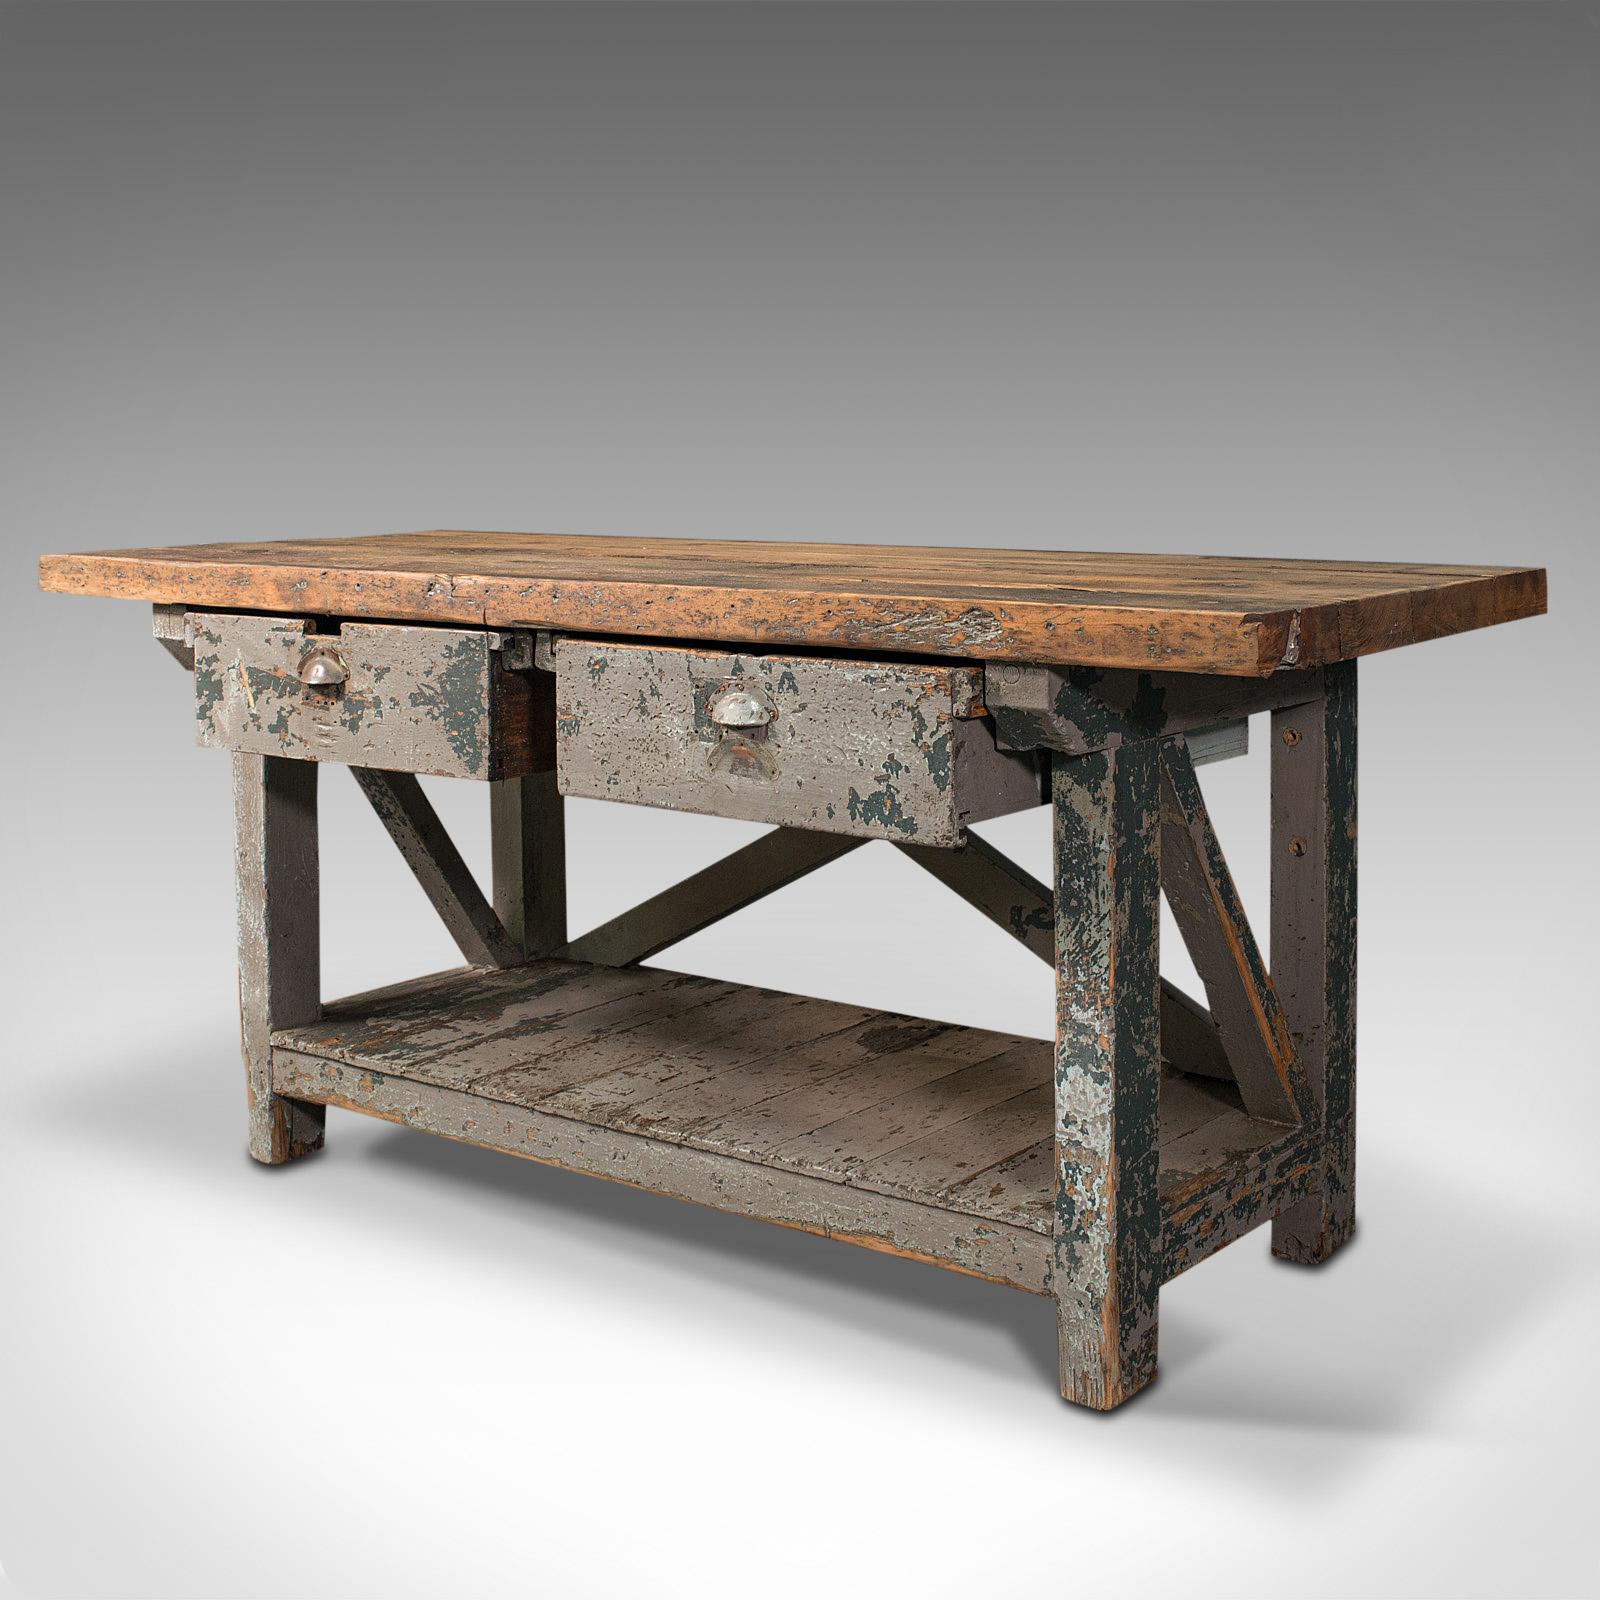 British Large Antique Silversmith's Bench, English, Pine, Craftsman's Table, Victorian